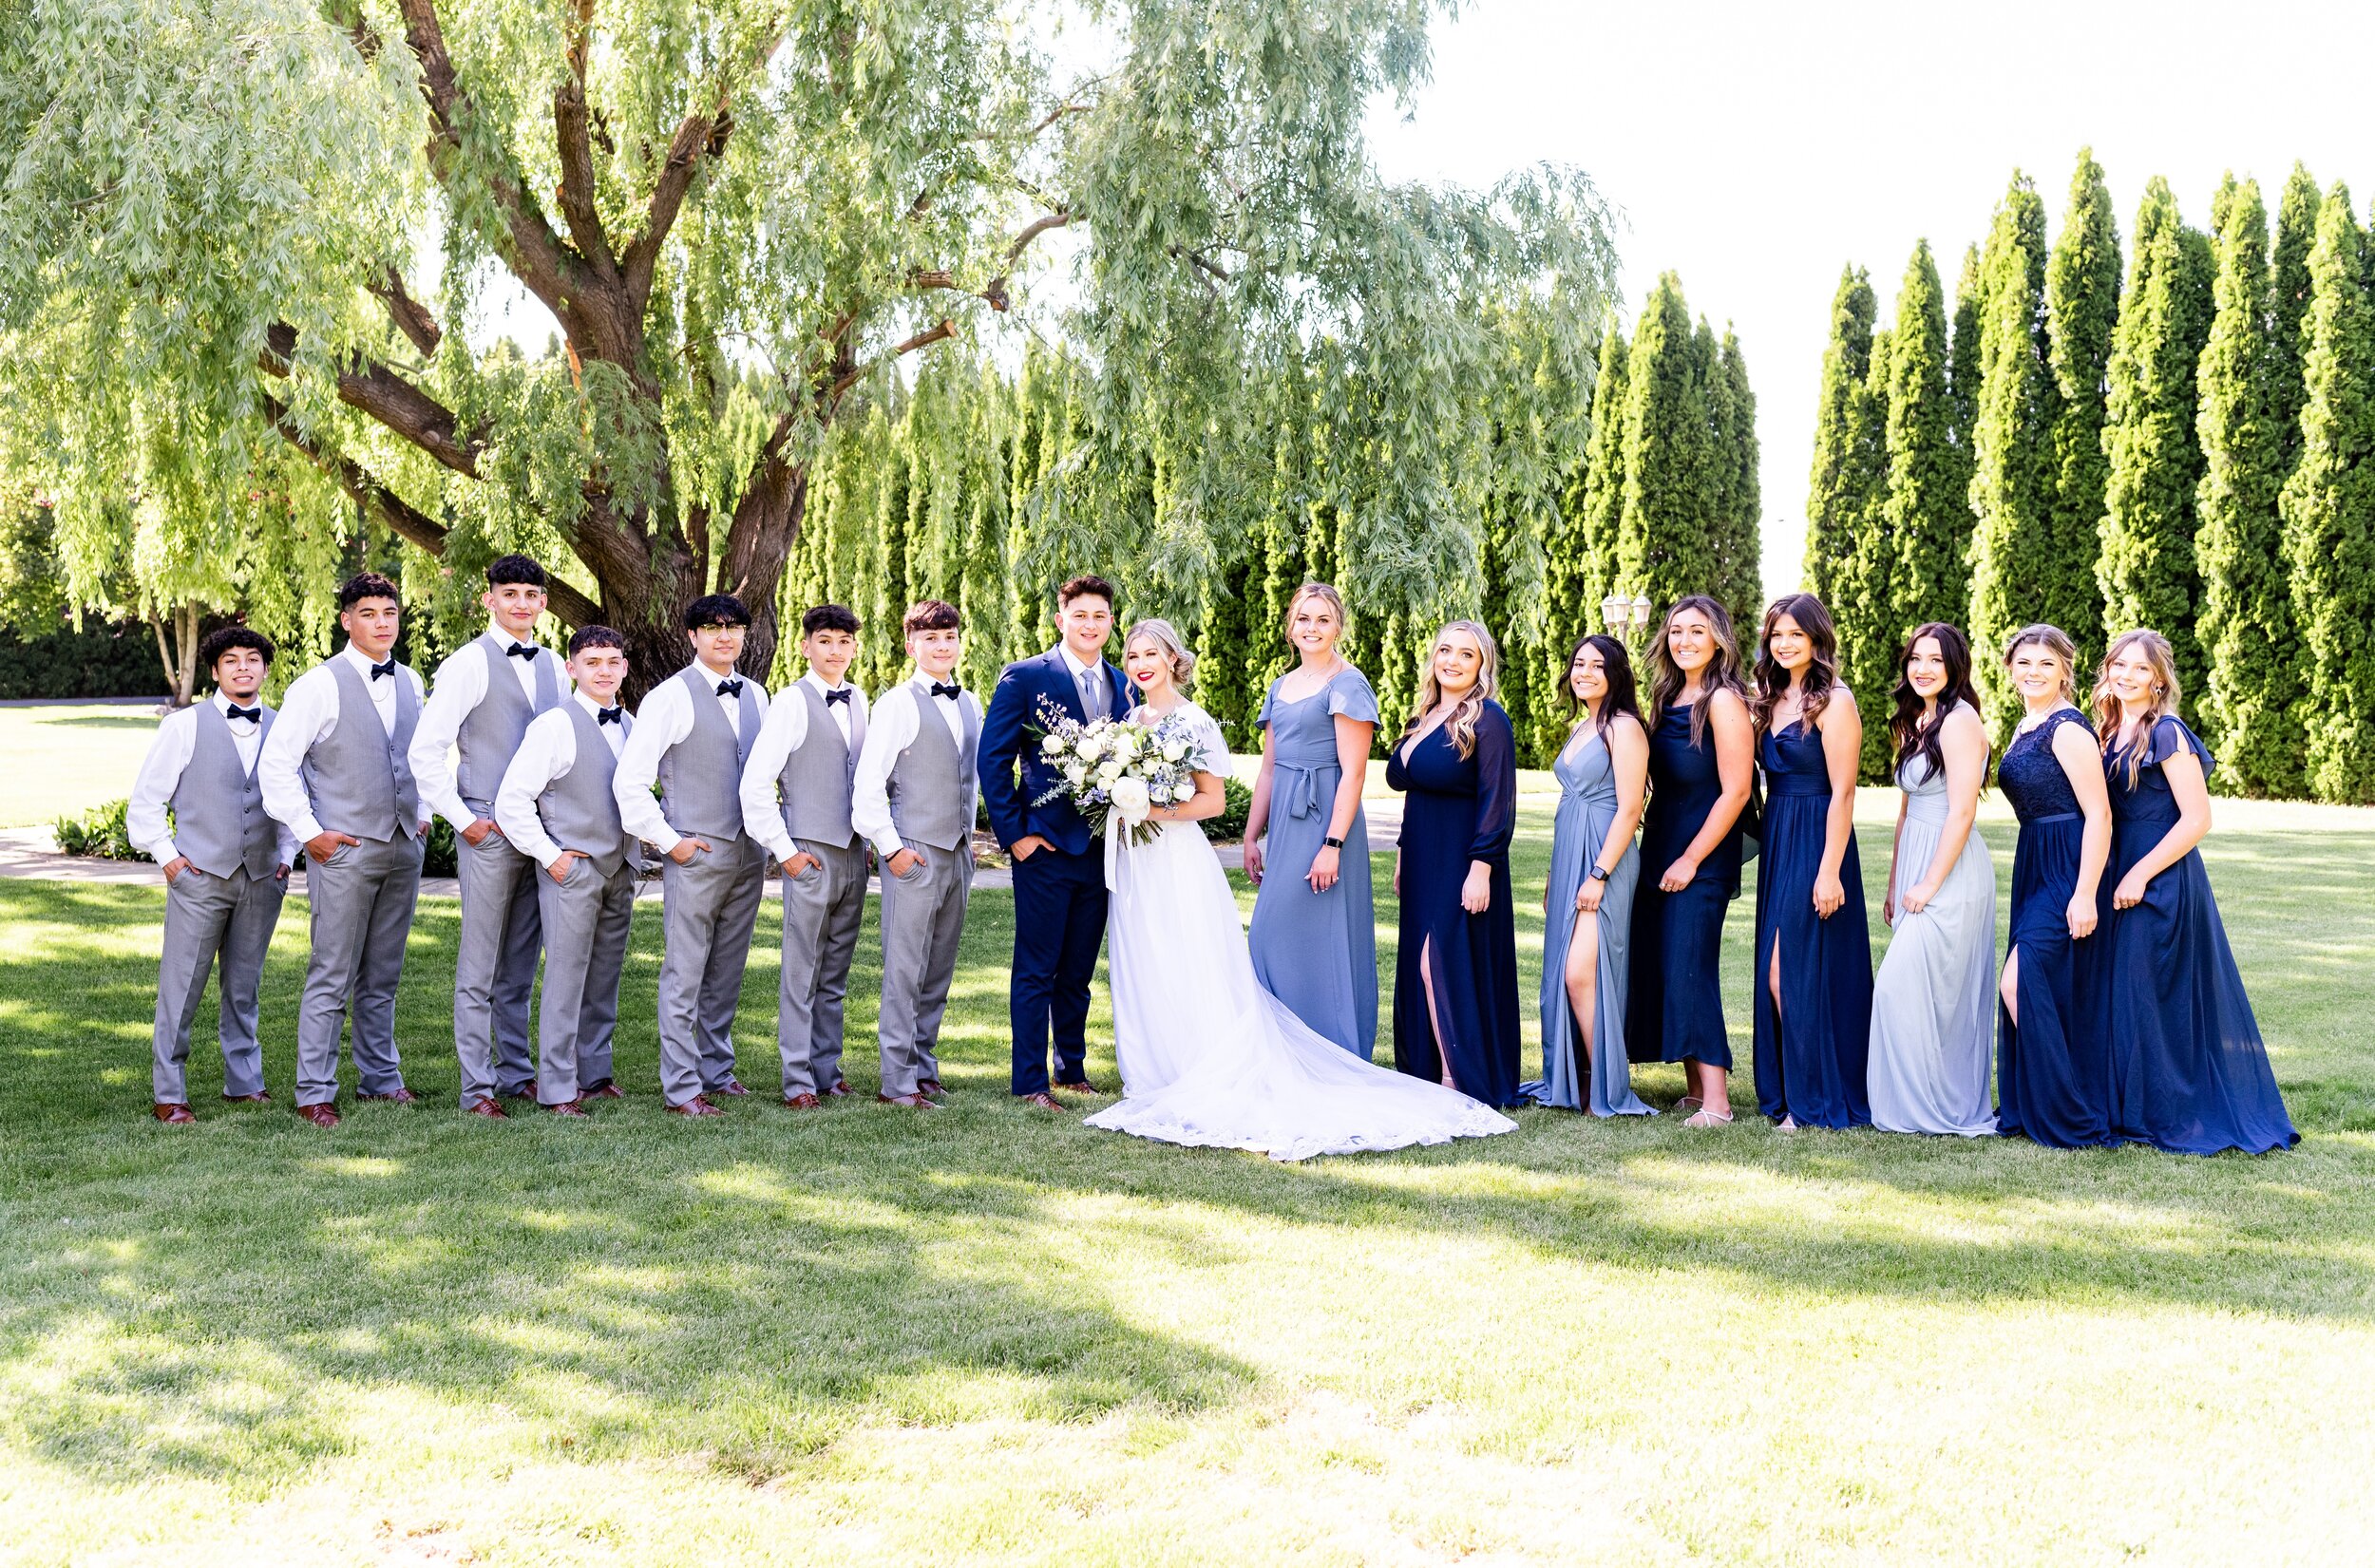 Tri Cities Pasco Promise Garden Wedding Photographer - Bridal Party Photo - Tri Cities Wedding Photographer - 509 Bride - Blue Bridesmaids Dresses 